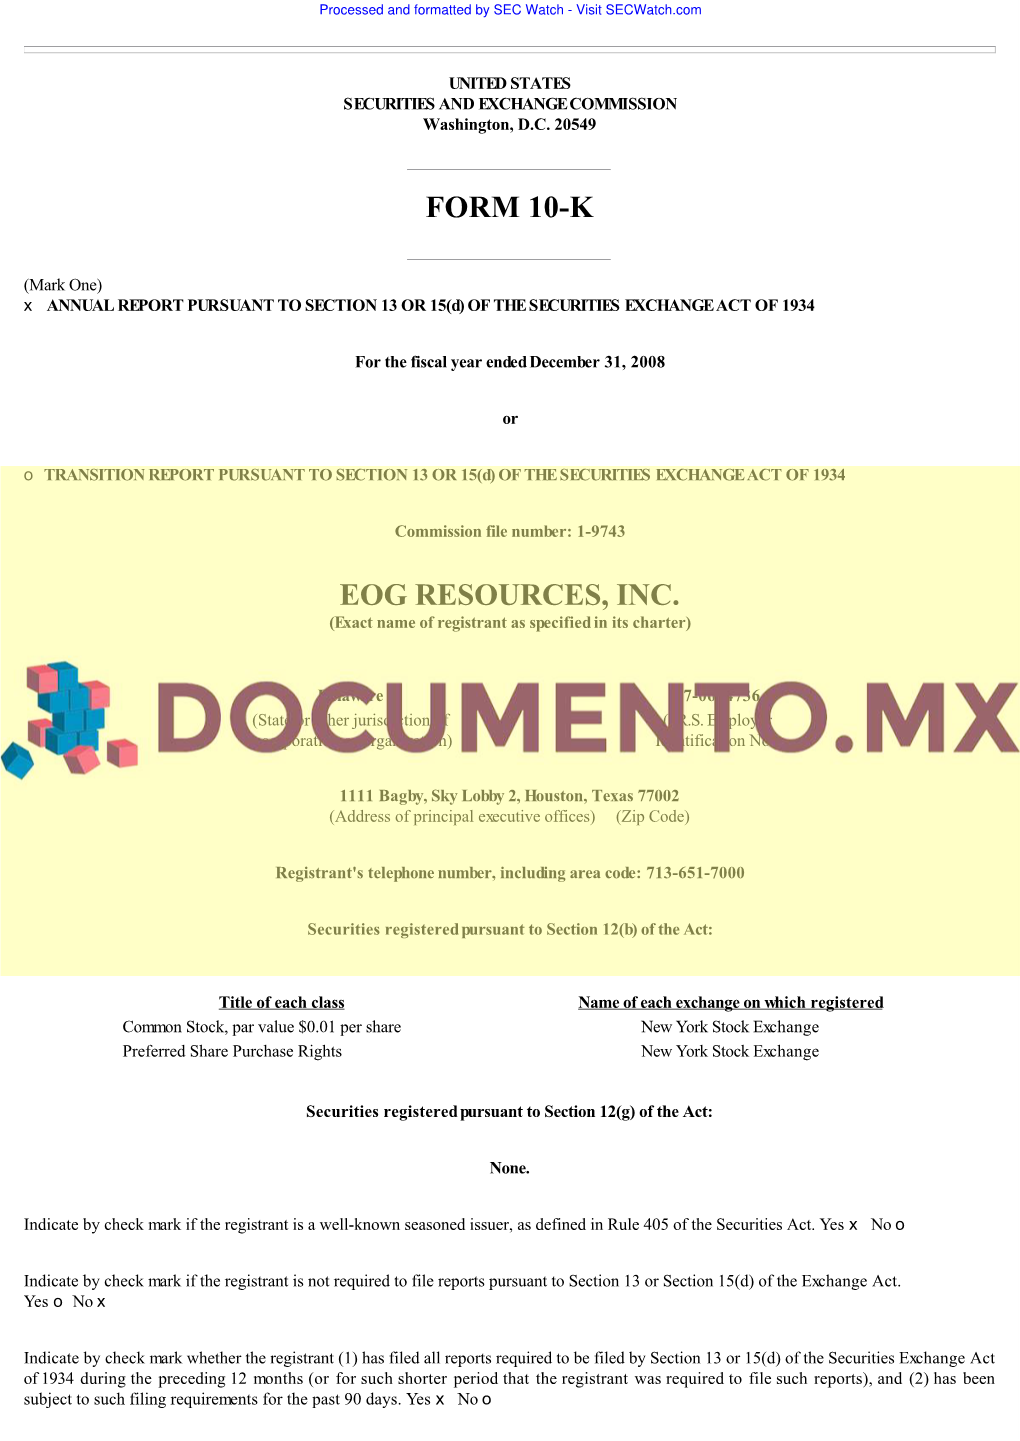 Form 10-K Eog Resources, Inc